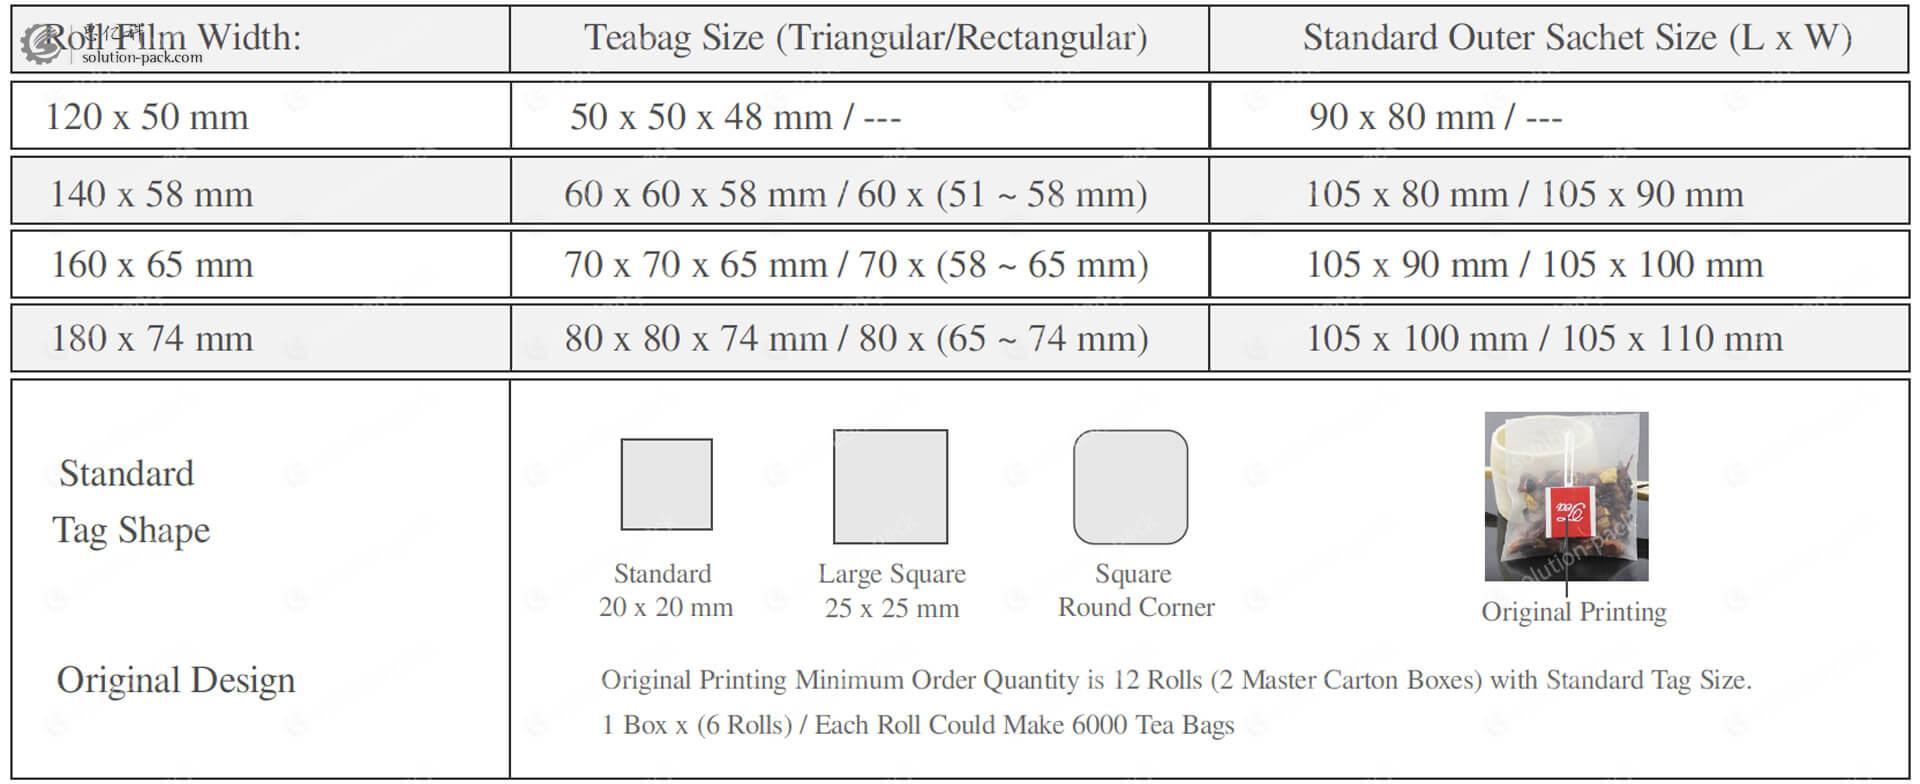 Solution-Pack | Enveloped Pyramid Tea Bag Packing Machine | Smart Pyramid Teabag Packaging Machine | Teabag Machine